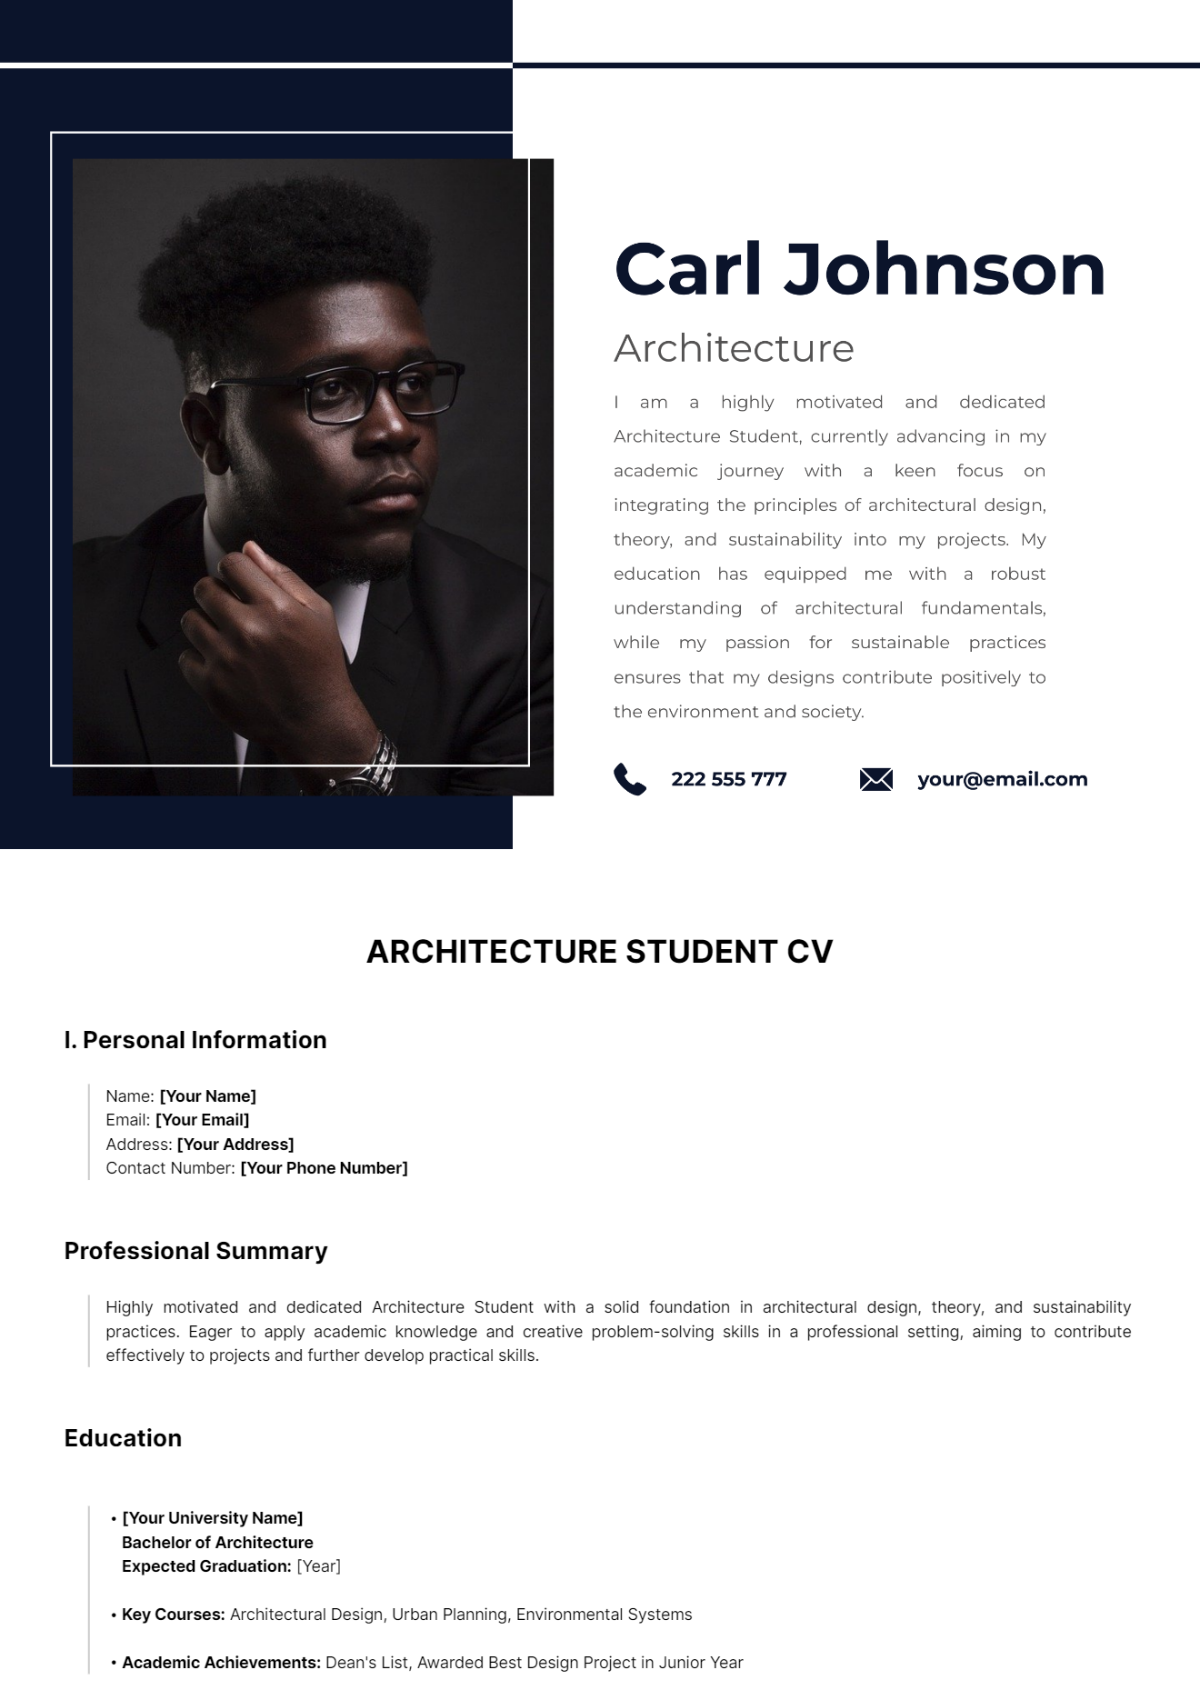 Architecture Student CV Template